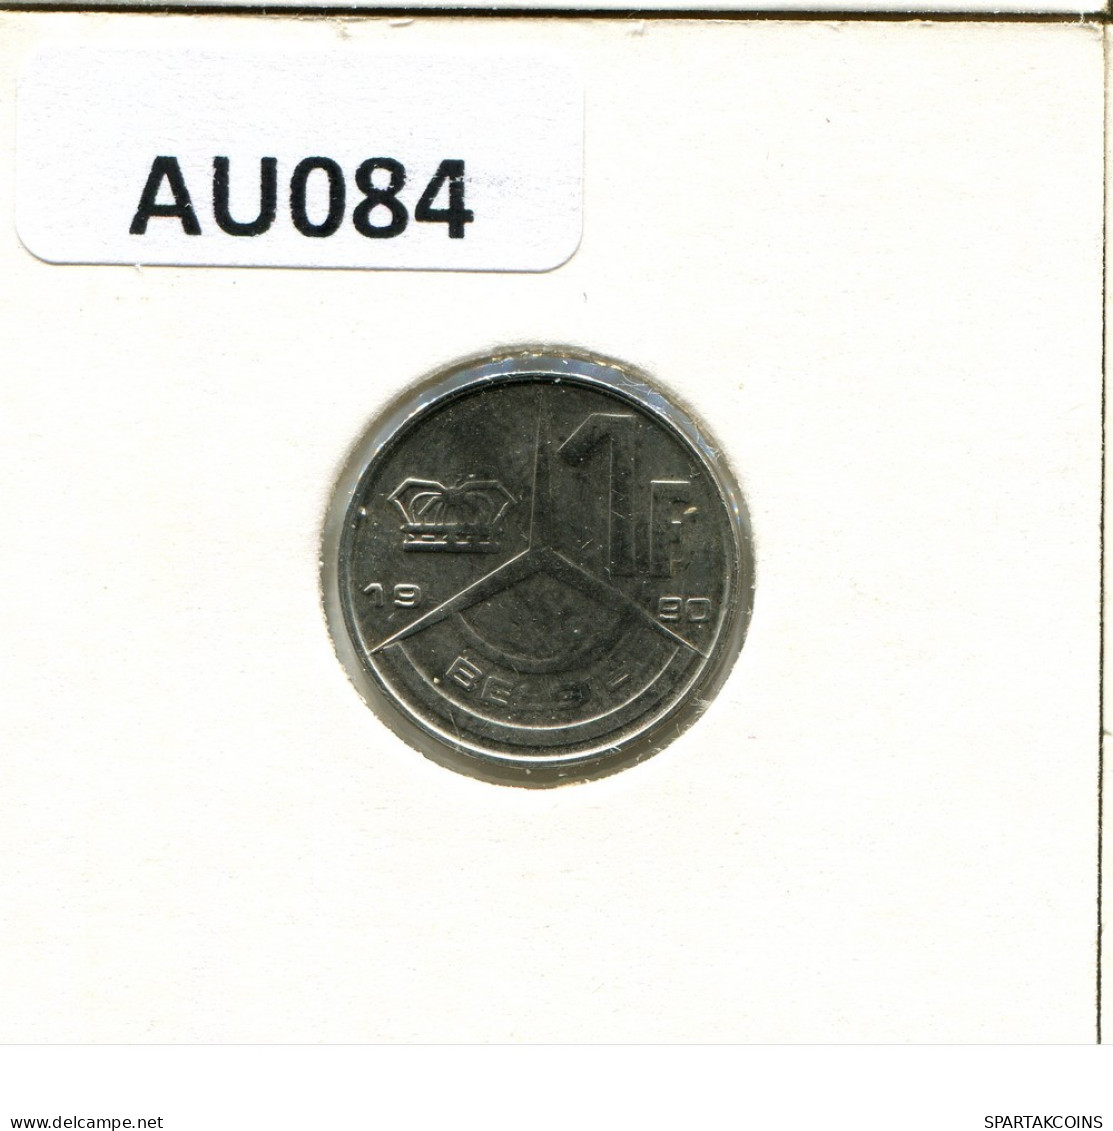 1 FRANC 1990 DUTCH Text BELGIQUE BELGIUM Pièce #AU084.F.A - 1 Franc